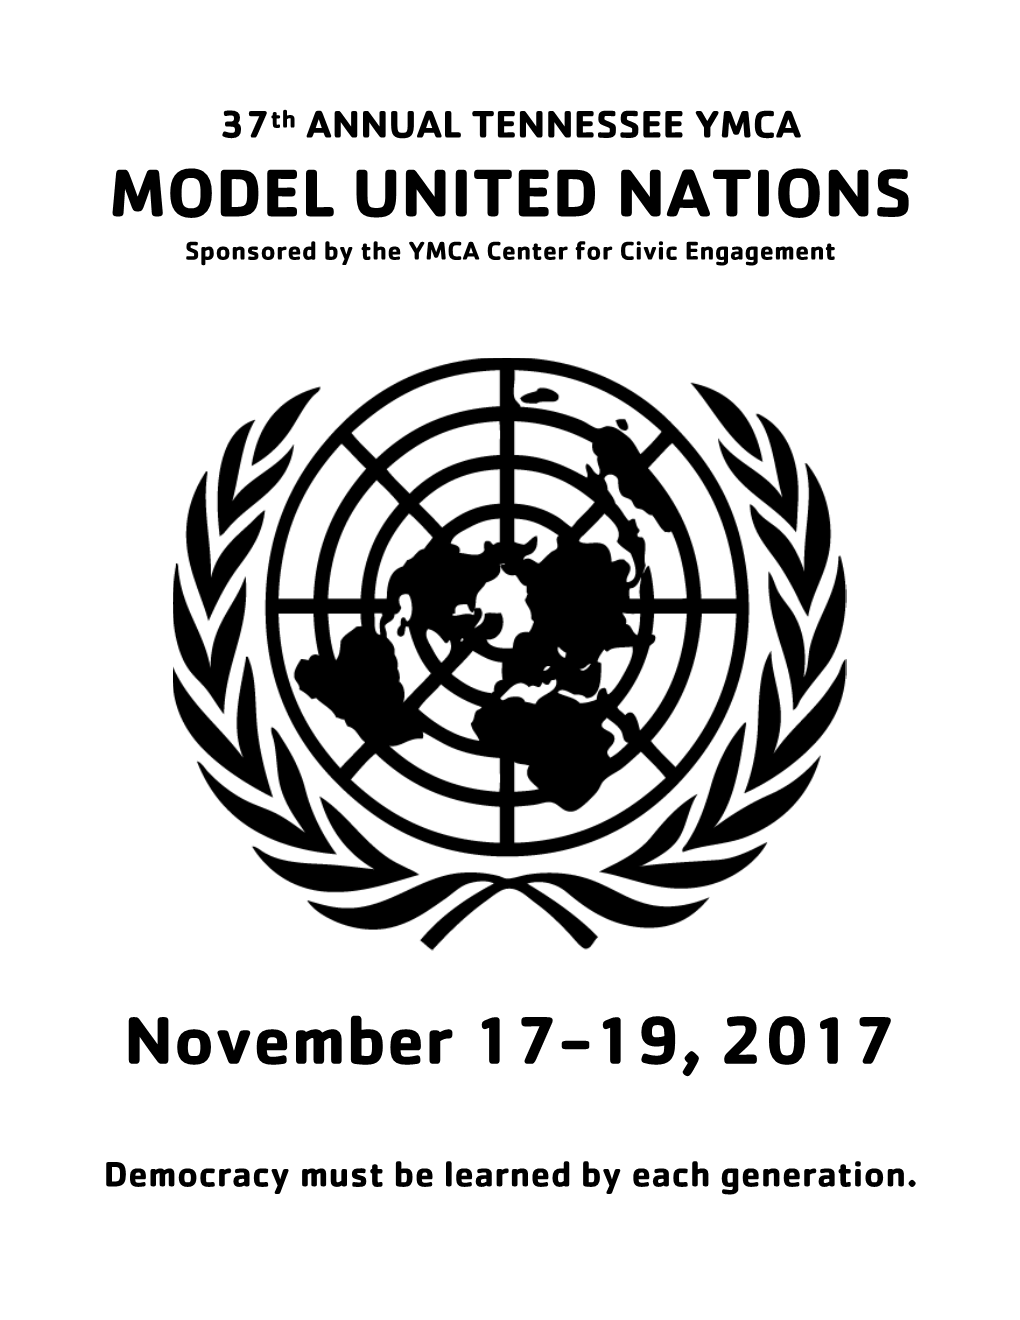 MODEL UNITED NATIONS November 17-19, 2017